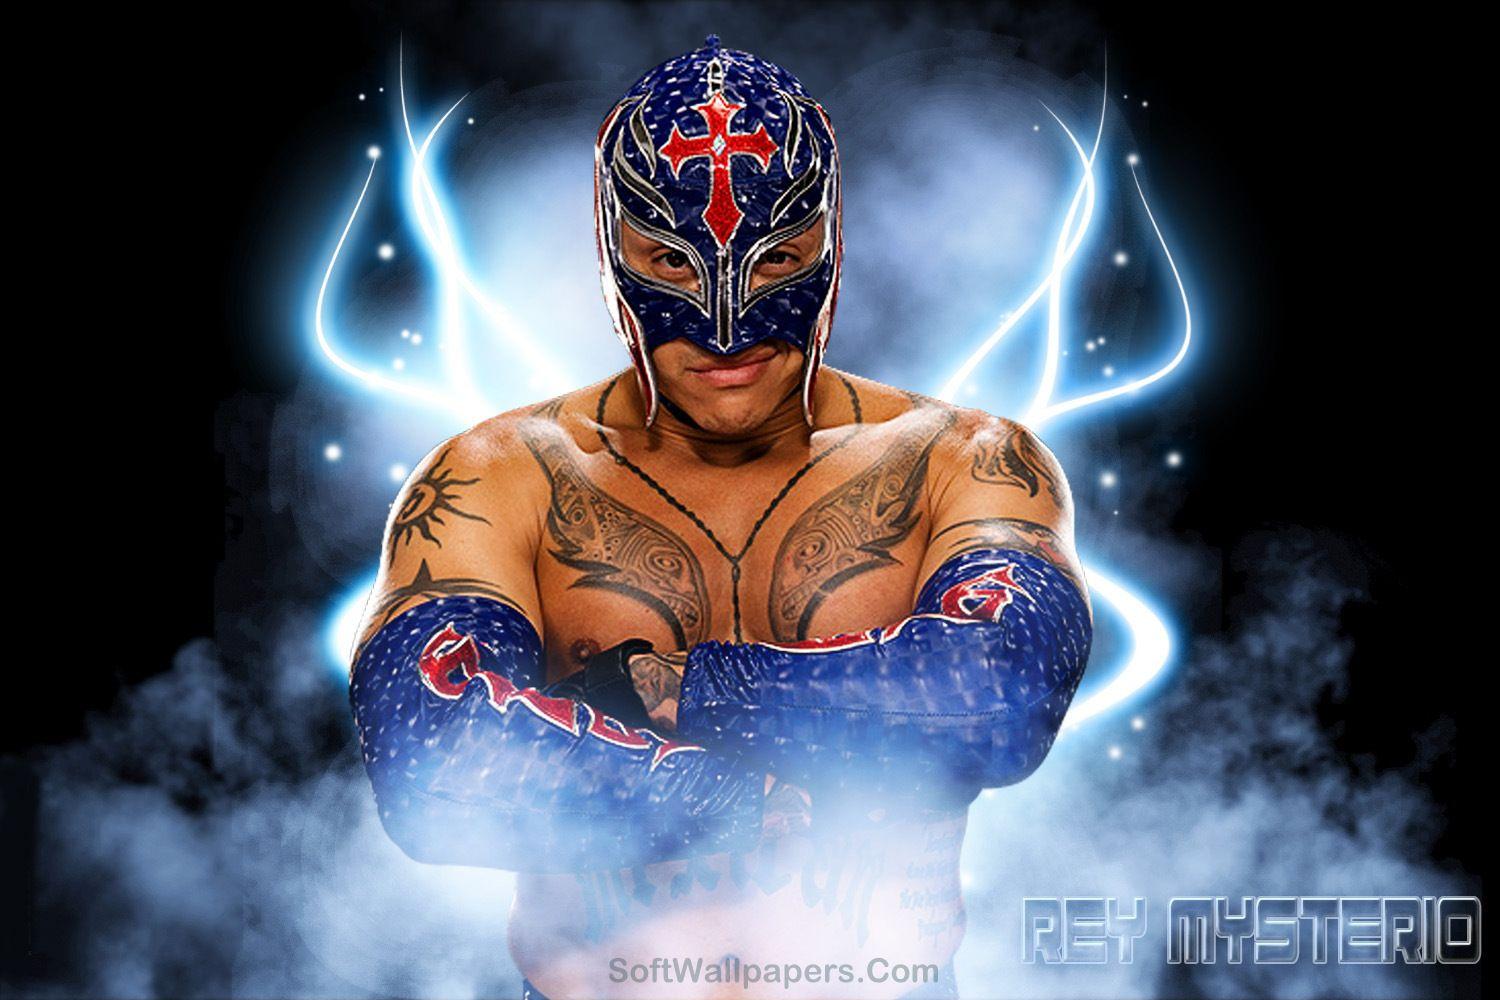 WWE Rey Mysterio Latest HD Wallpaper. Soft Wallpaper. Image